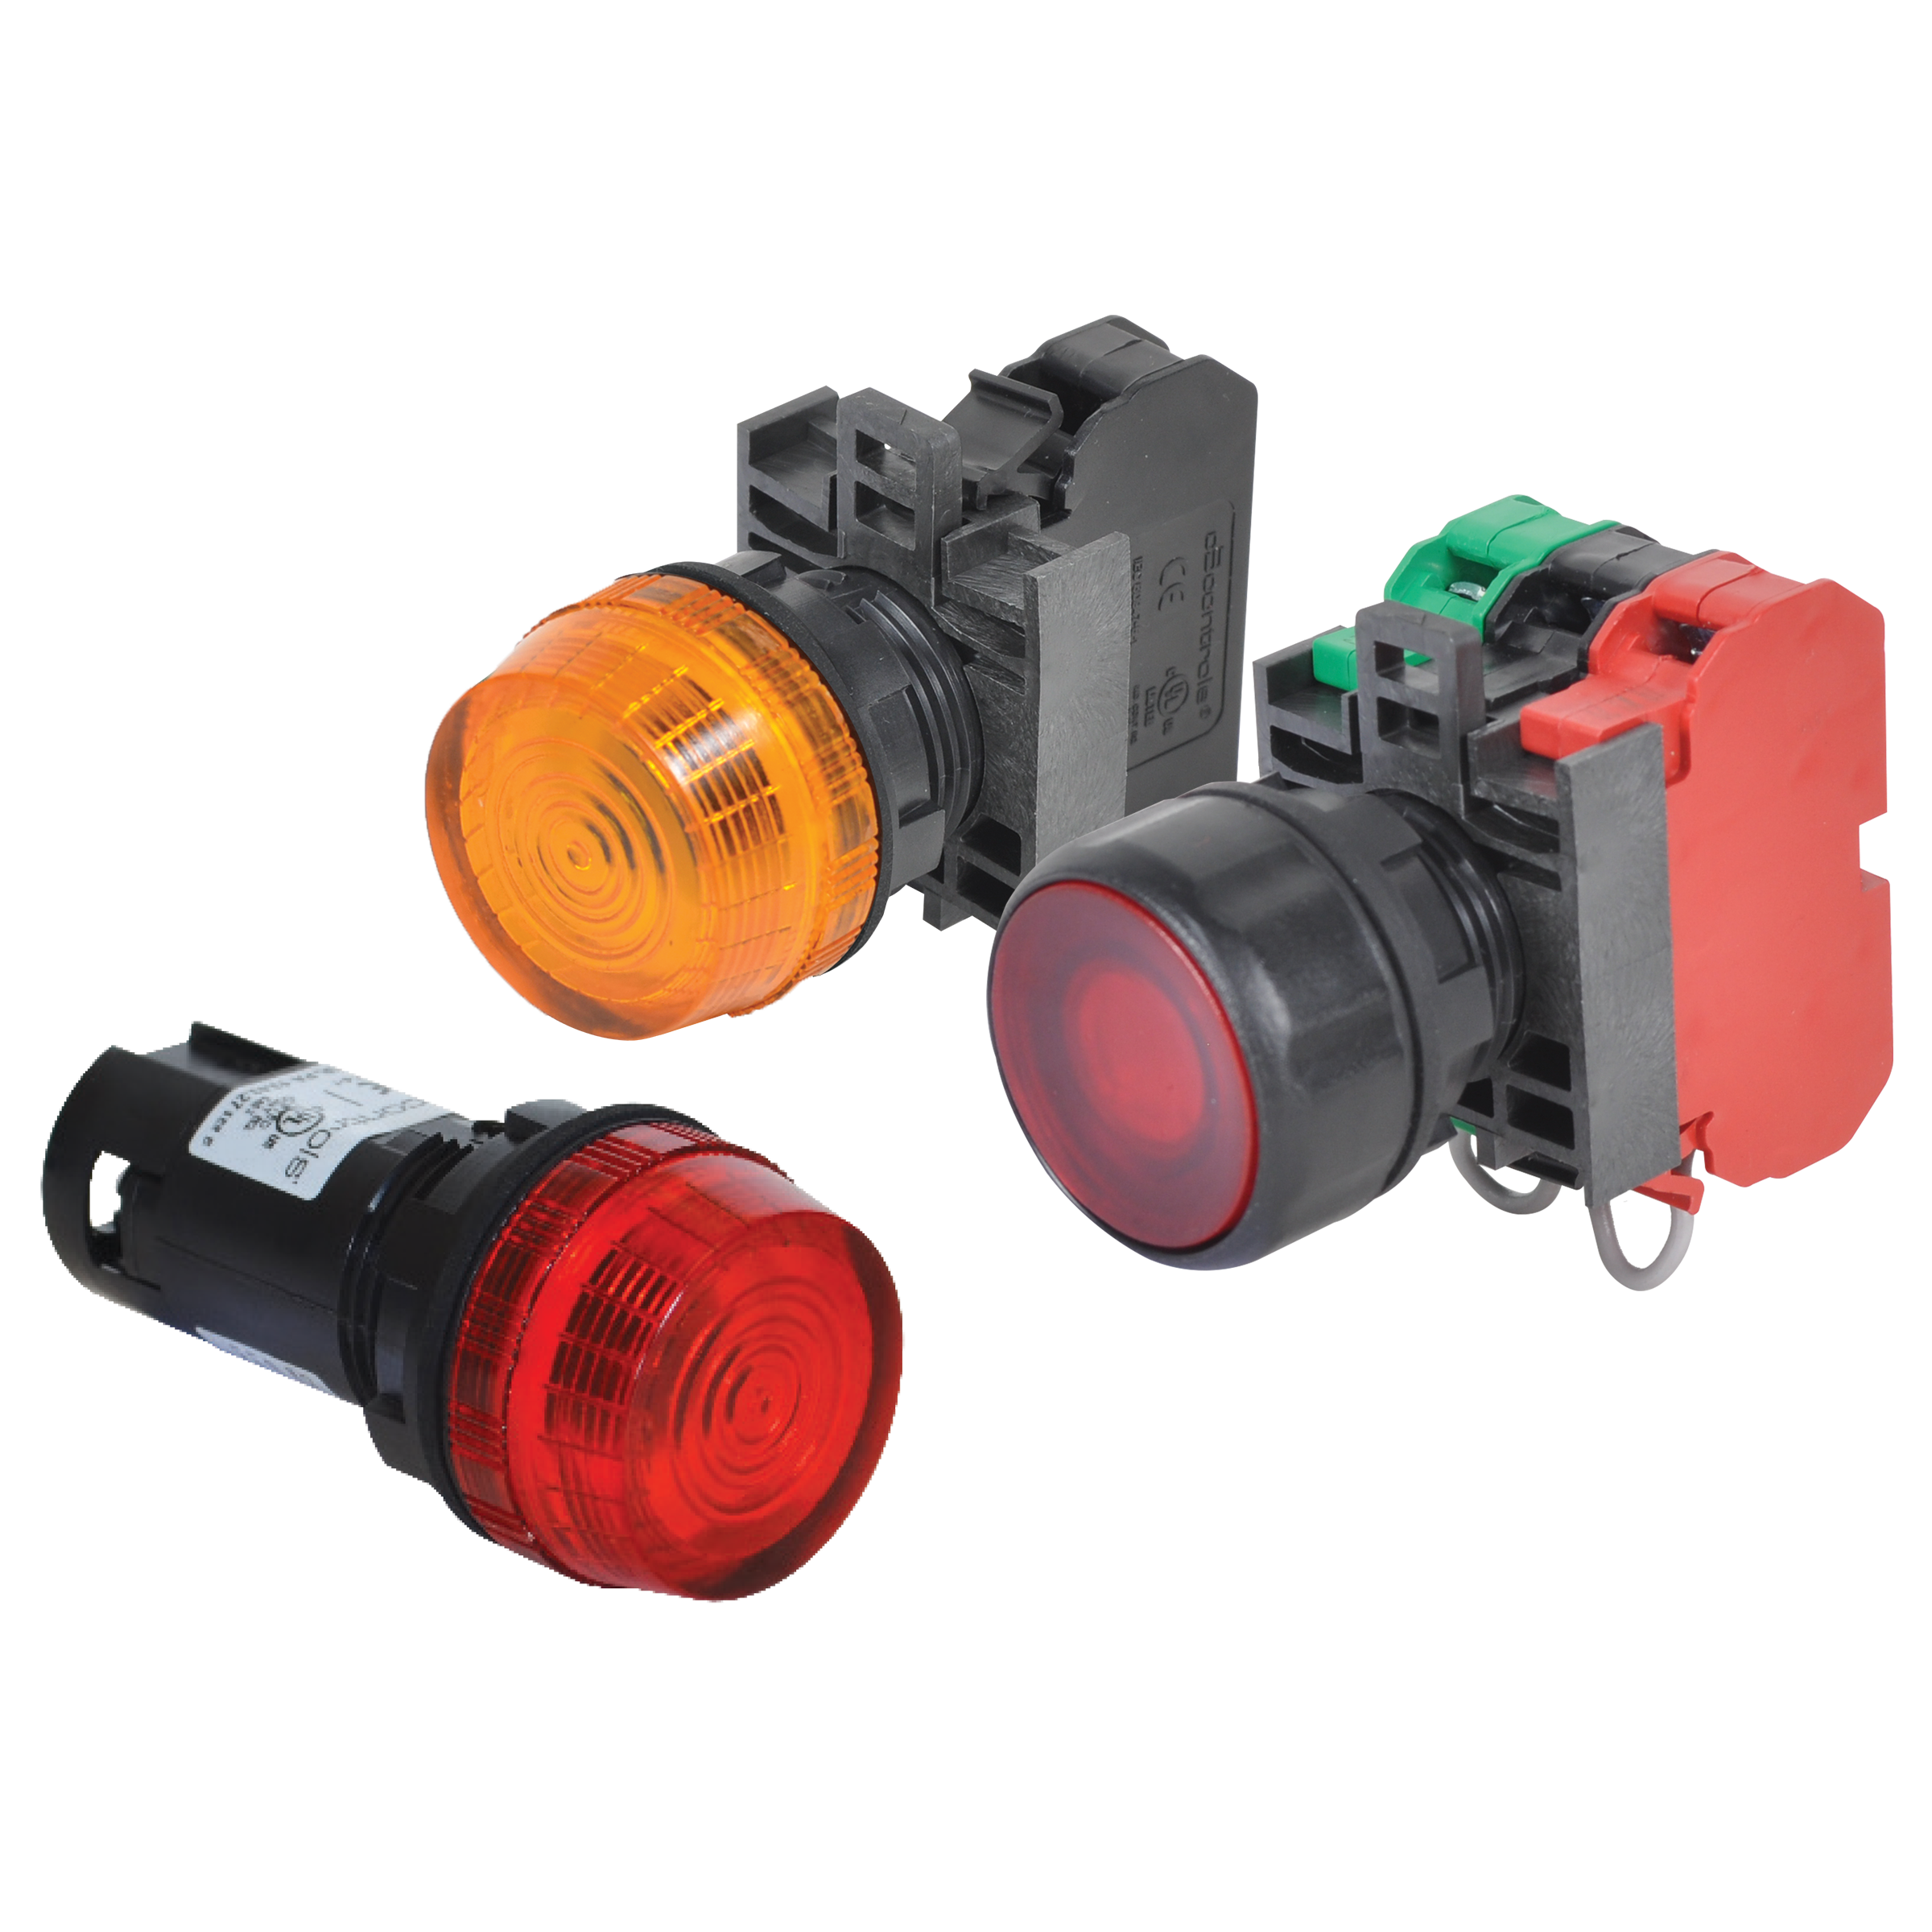 UL Listed 22mm IEC Unibody Pilot Lights with Modular design - c3controls